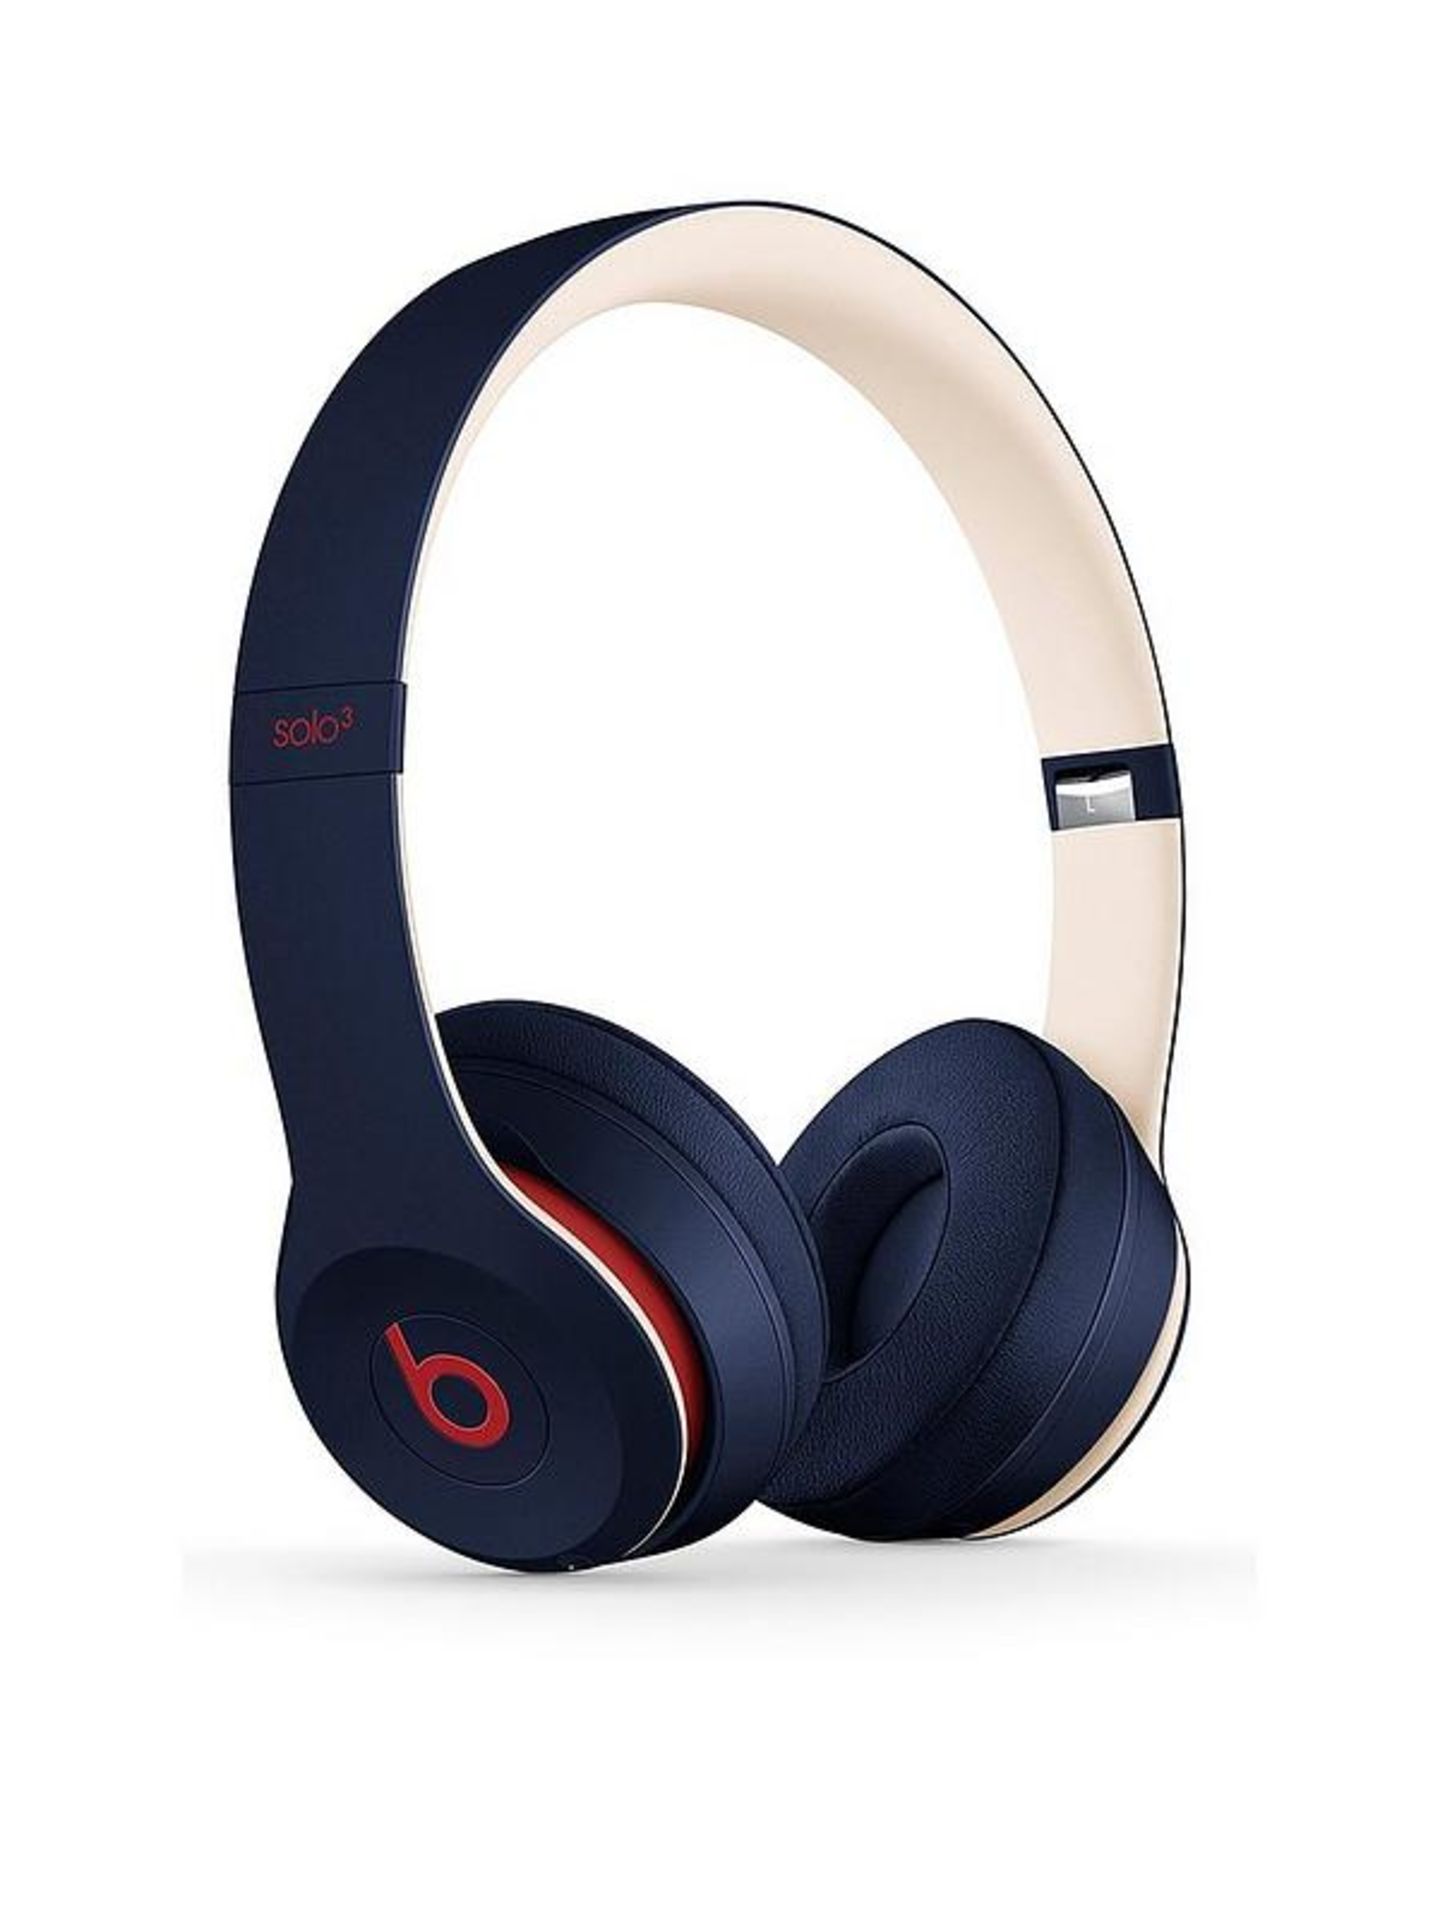 + VAT Brand New Beats Solo3 Wireless Bluetooth Headphones - Club Navy - Award Winning Sound - Up To